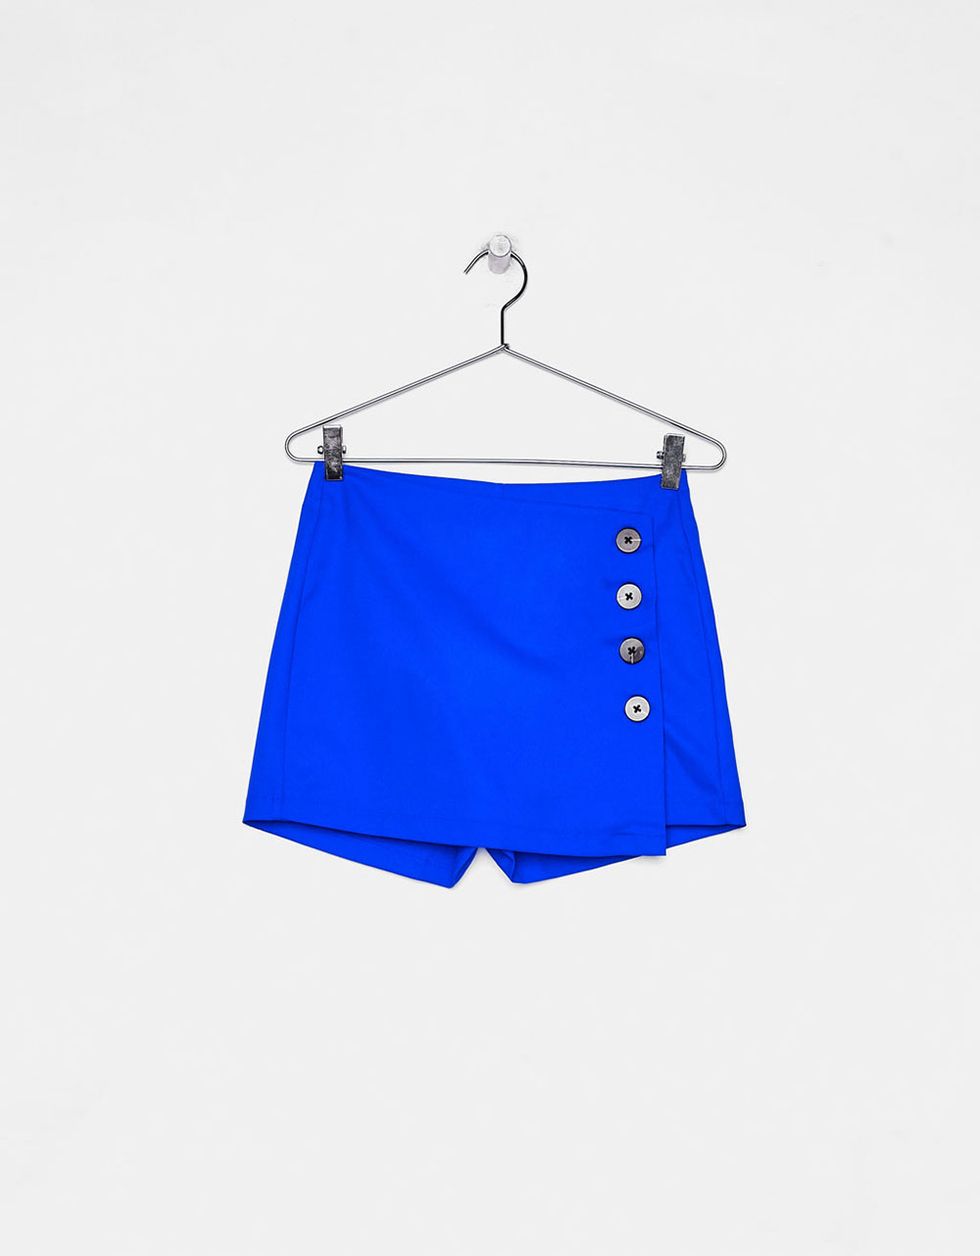 Clothing, Blue, Shorts, board short, Trunks, Cobalt blue, Swimsuit bottom, Turquoise, Electric blue, Skort, 